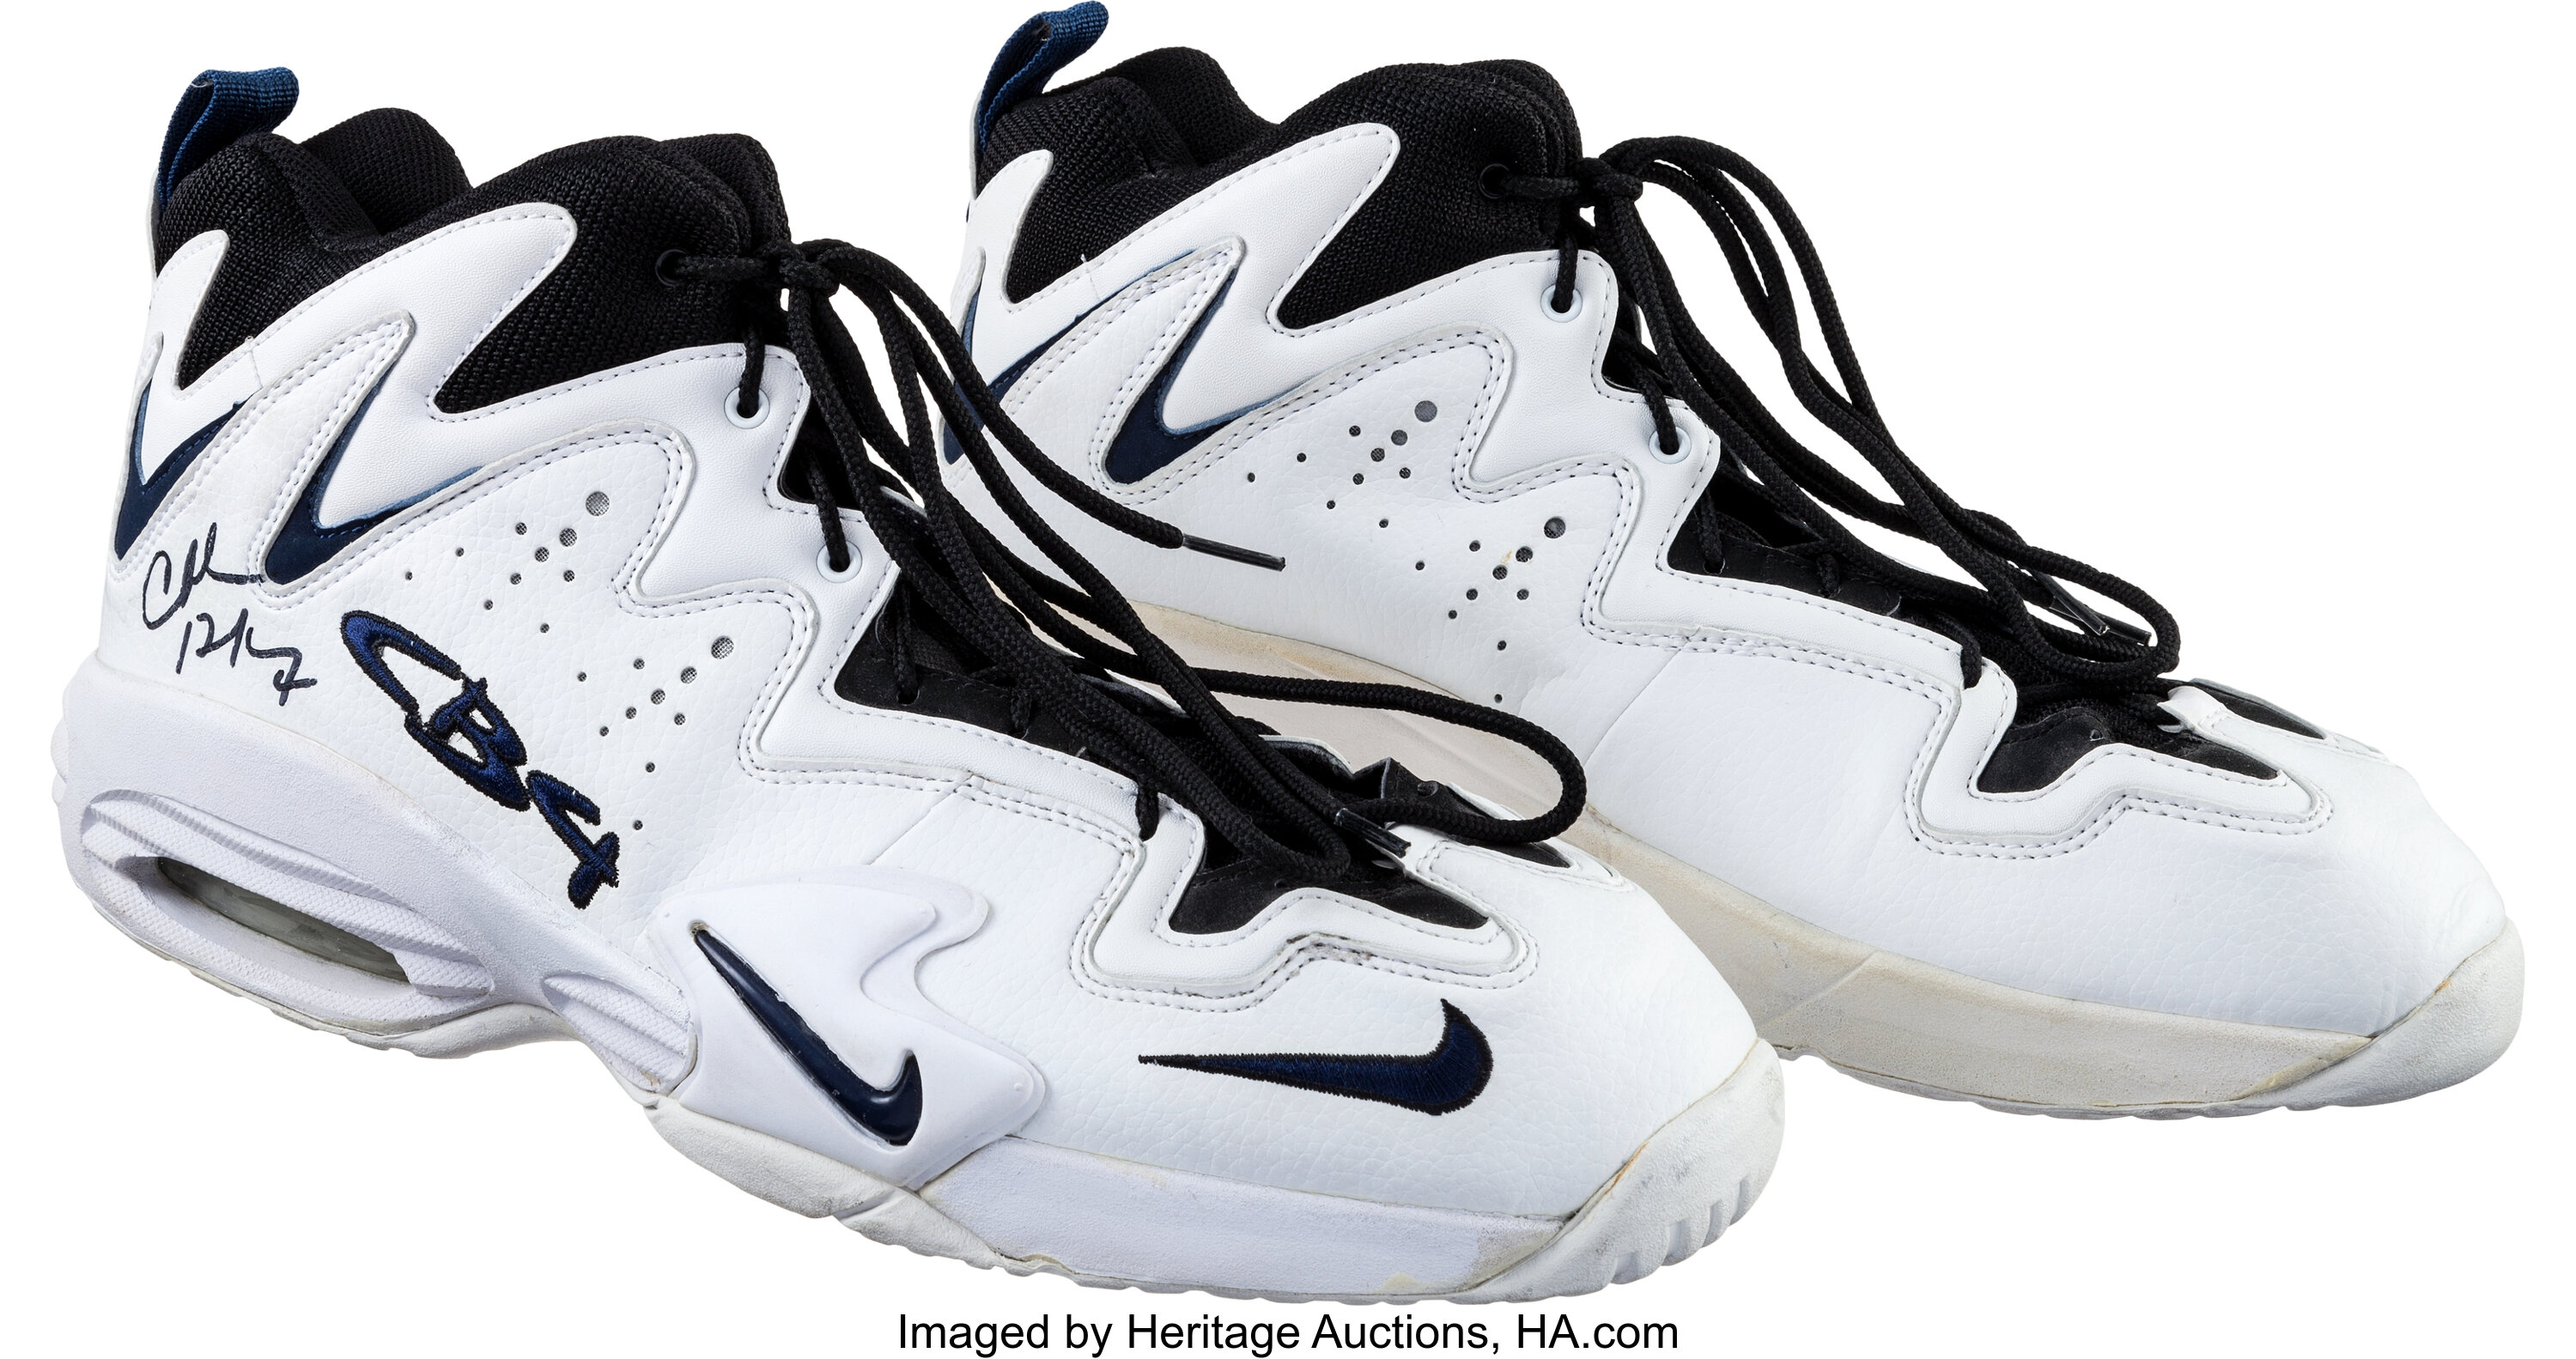 Nike Charles Barkley Basketball Shoes Sneakers